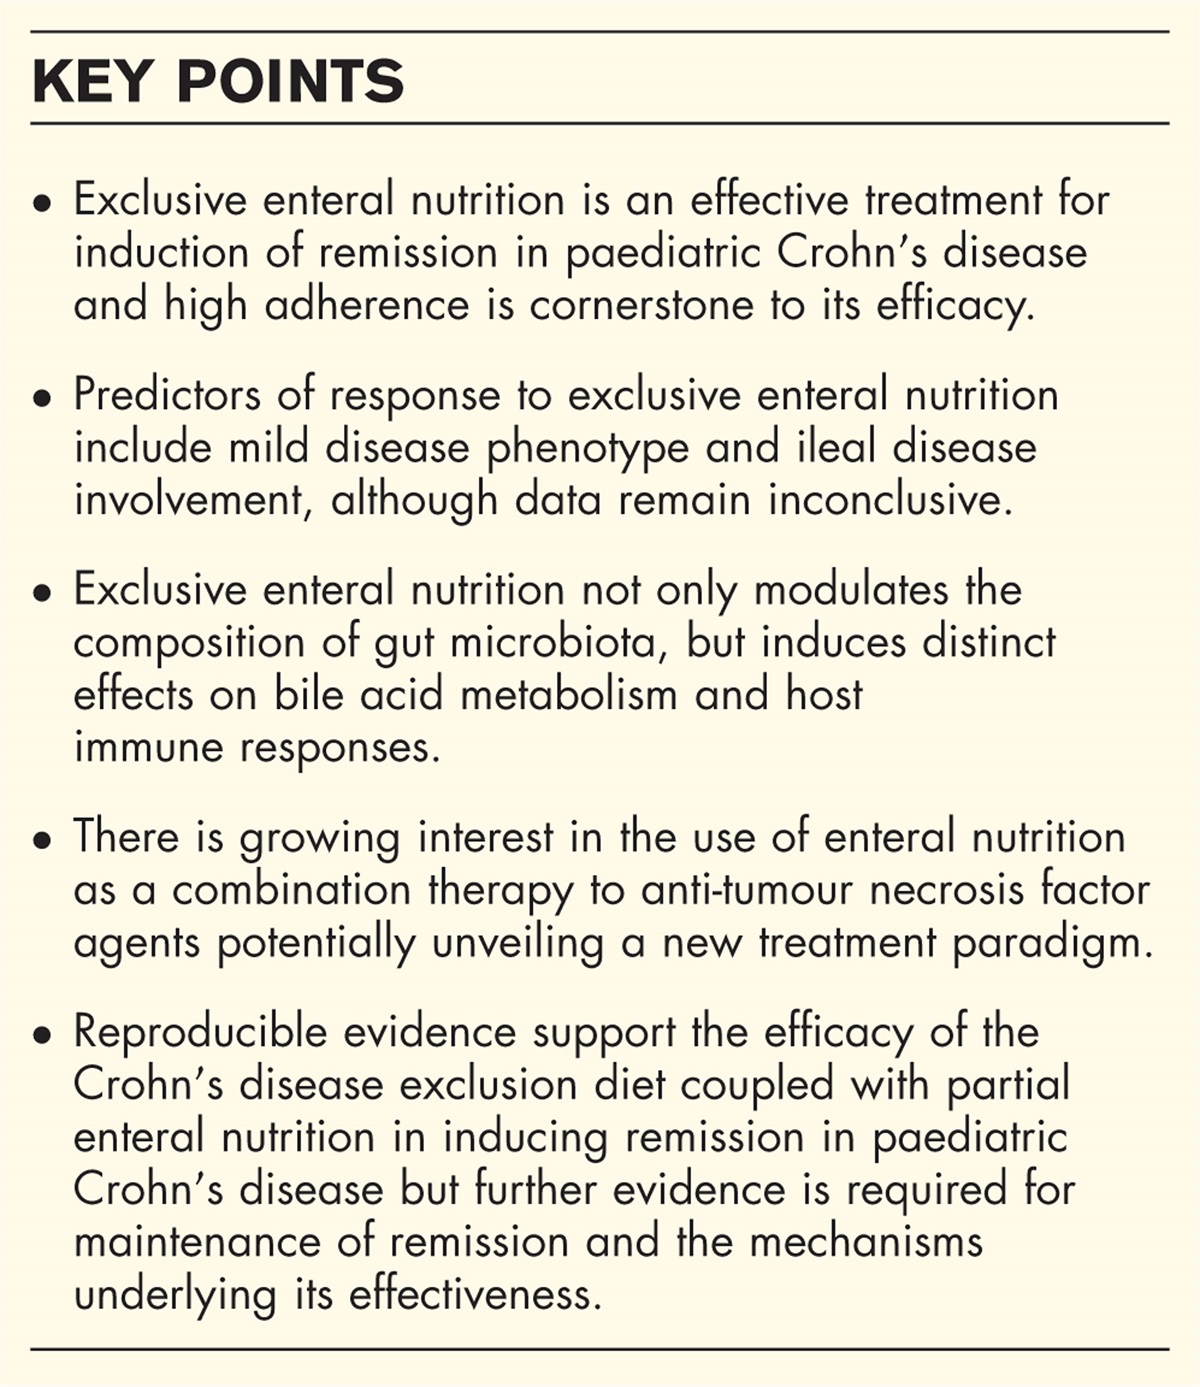 An update on dietary therapies in paediatric Crohn's disease